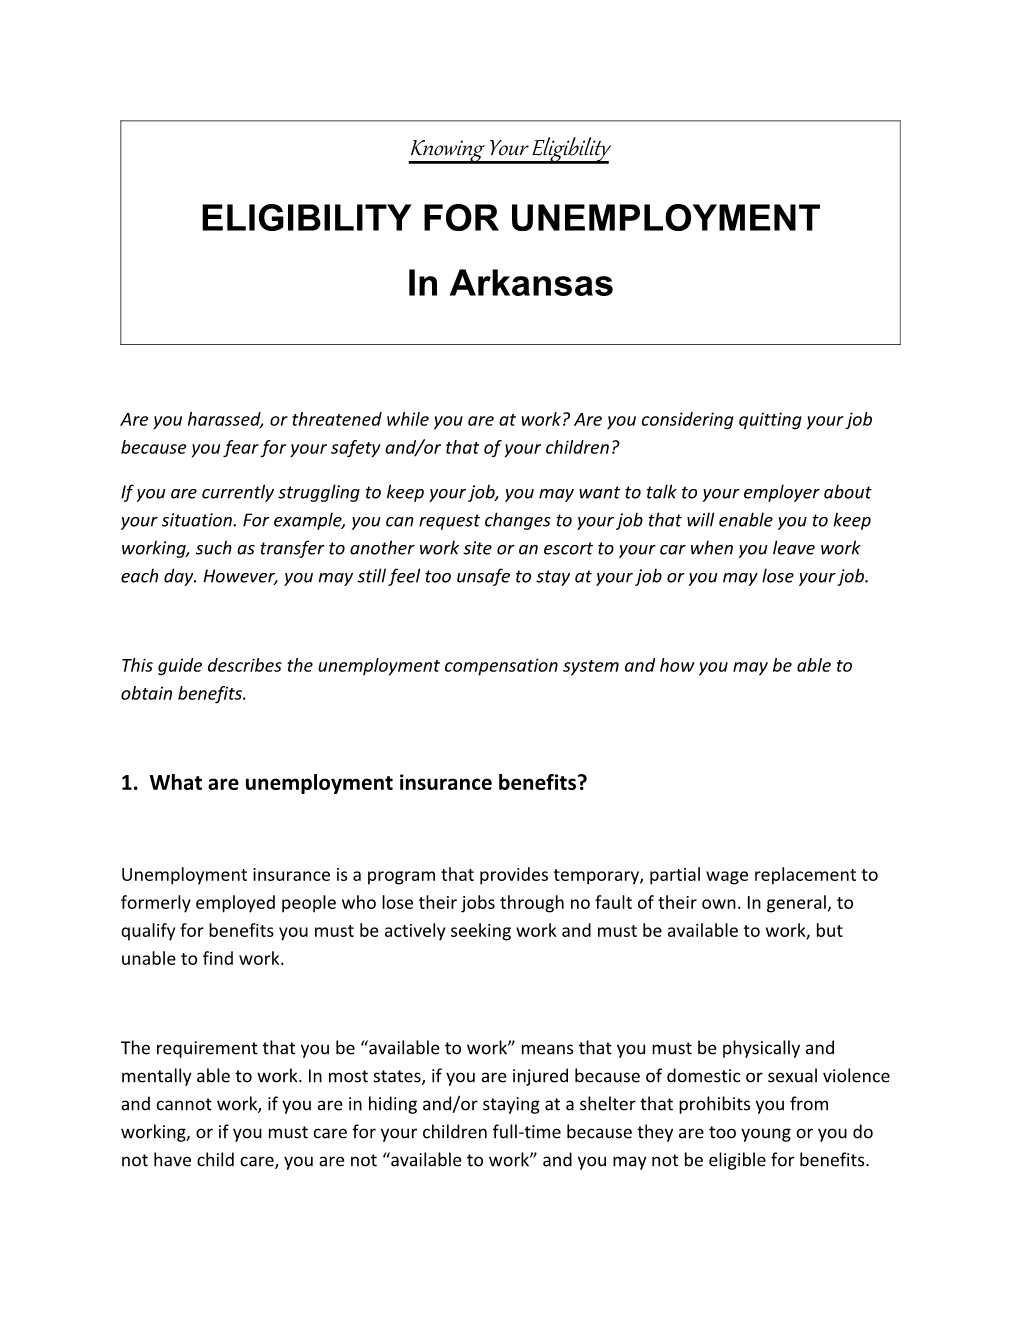 Eligibility for Unemployment